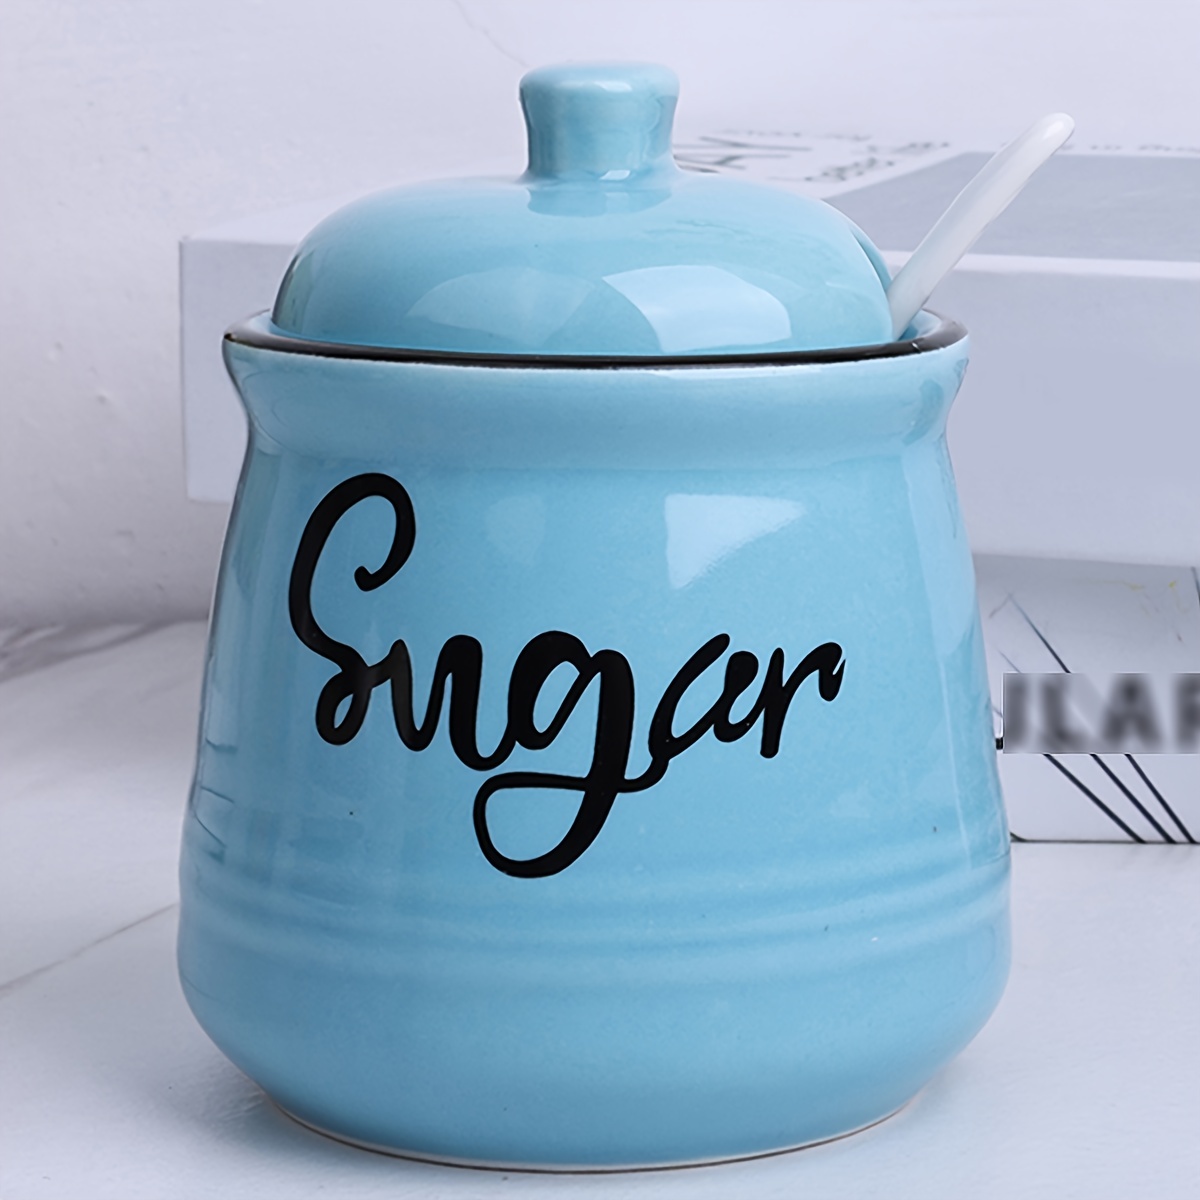 Sugar Ceramic Bowl Canister Jar Bowls Porcelain Seasoning